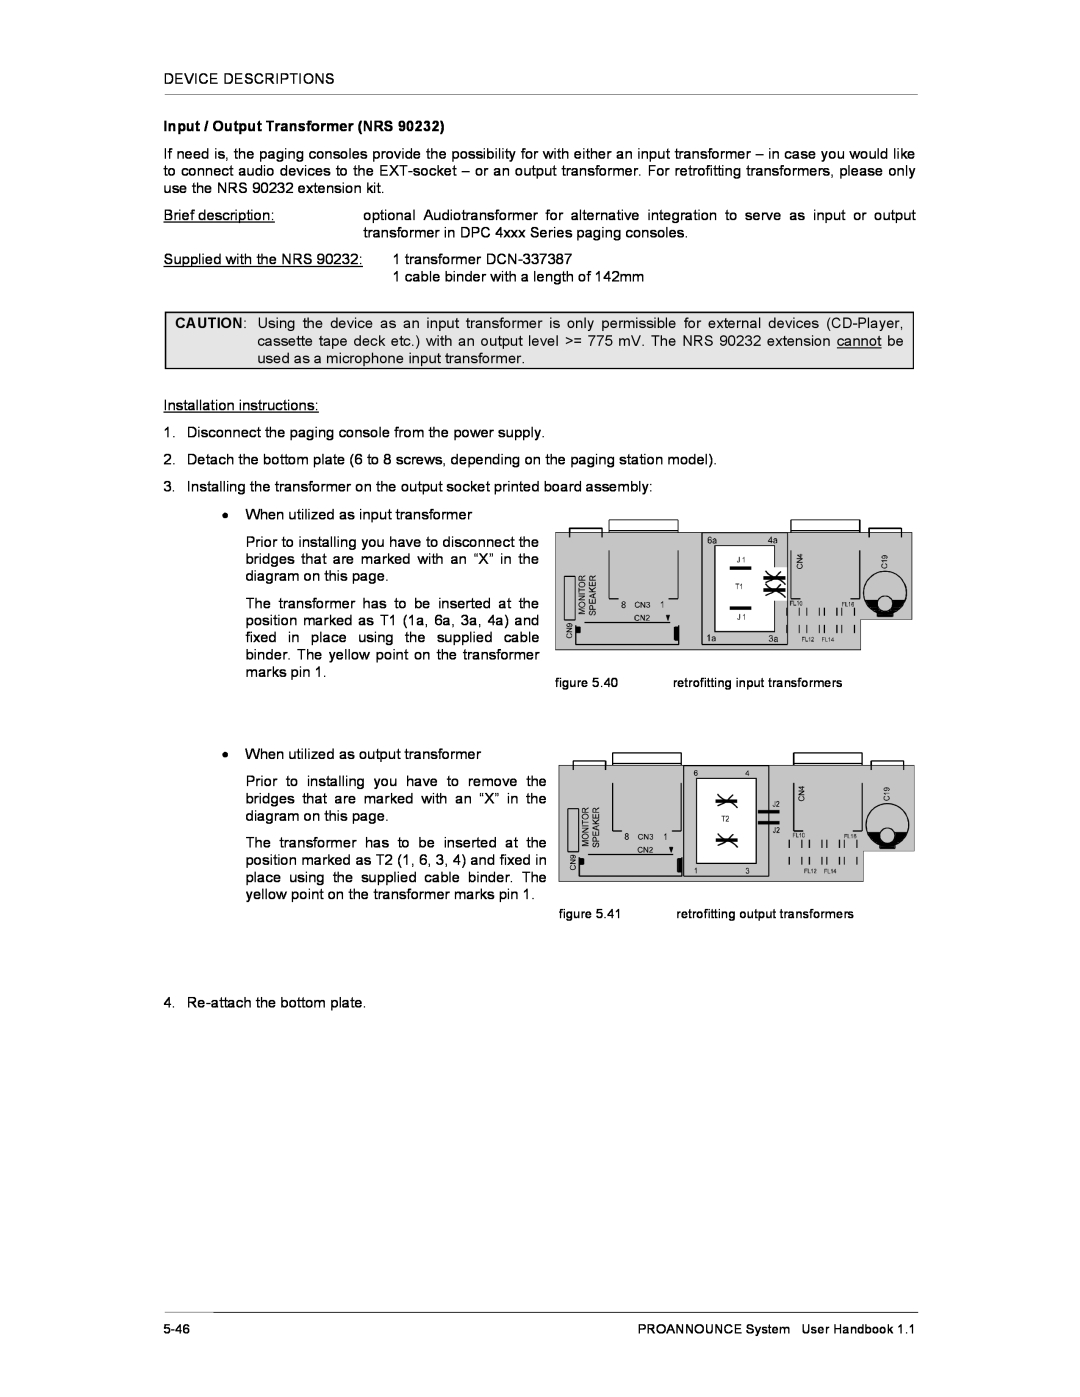 Dynacord DPM 4000 manual Input / Output Transformer NRS 